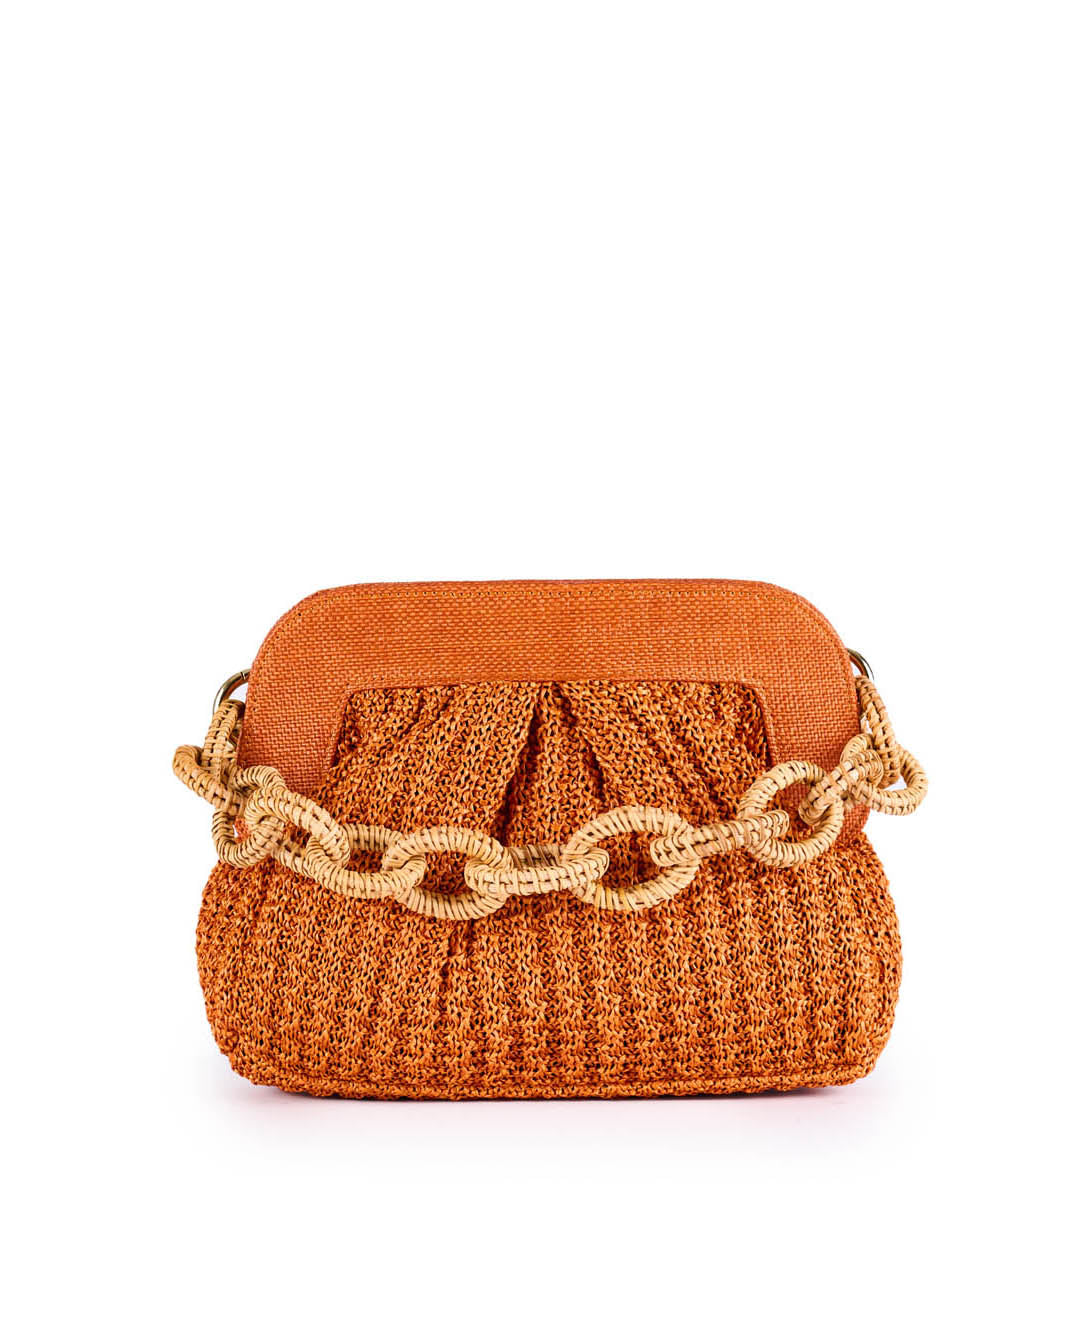 Orange woven handbag with chunky chain strap